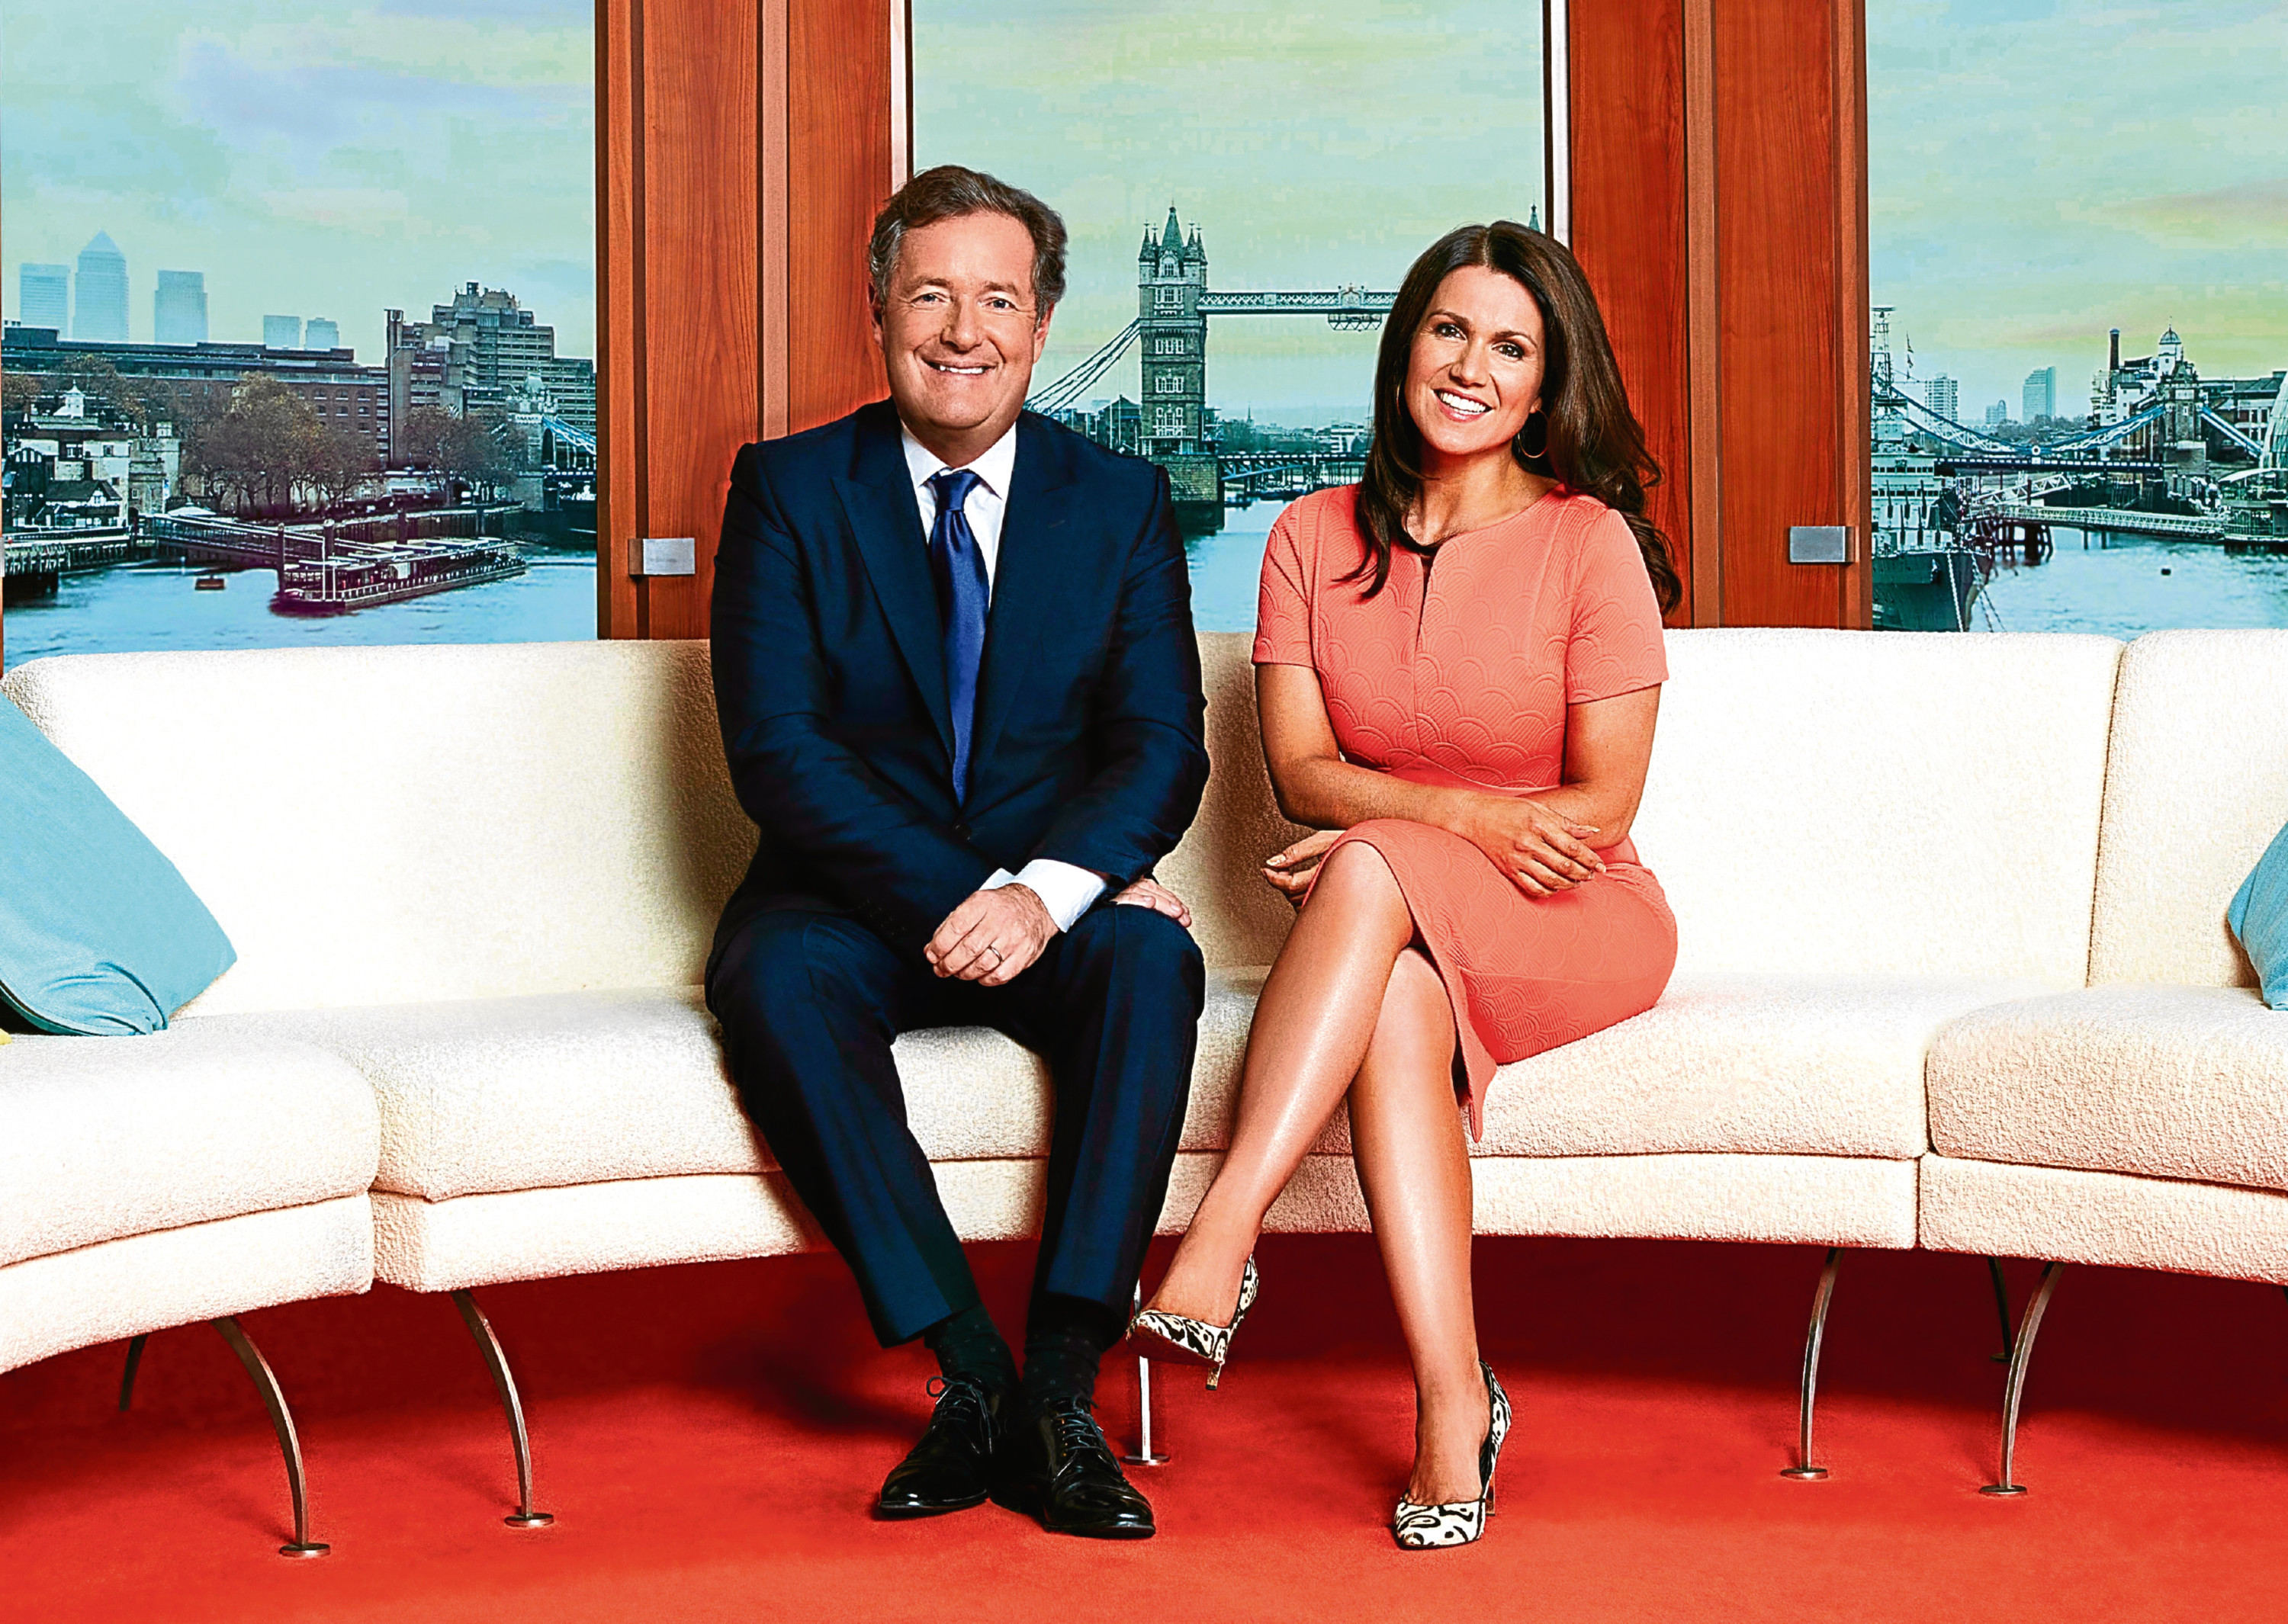 Piers Morgan and Susanna Reid on Good Morning Britain (ITV, Jonathan Ford)